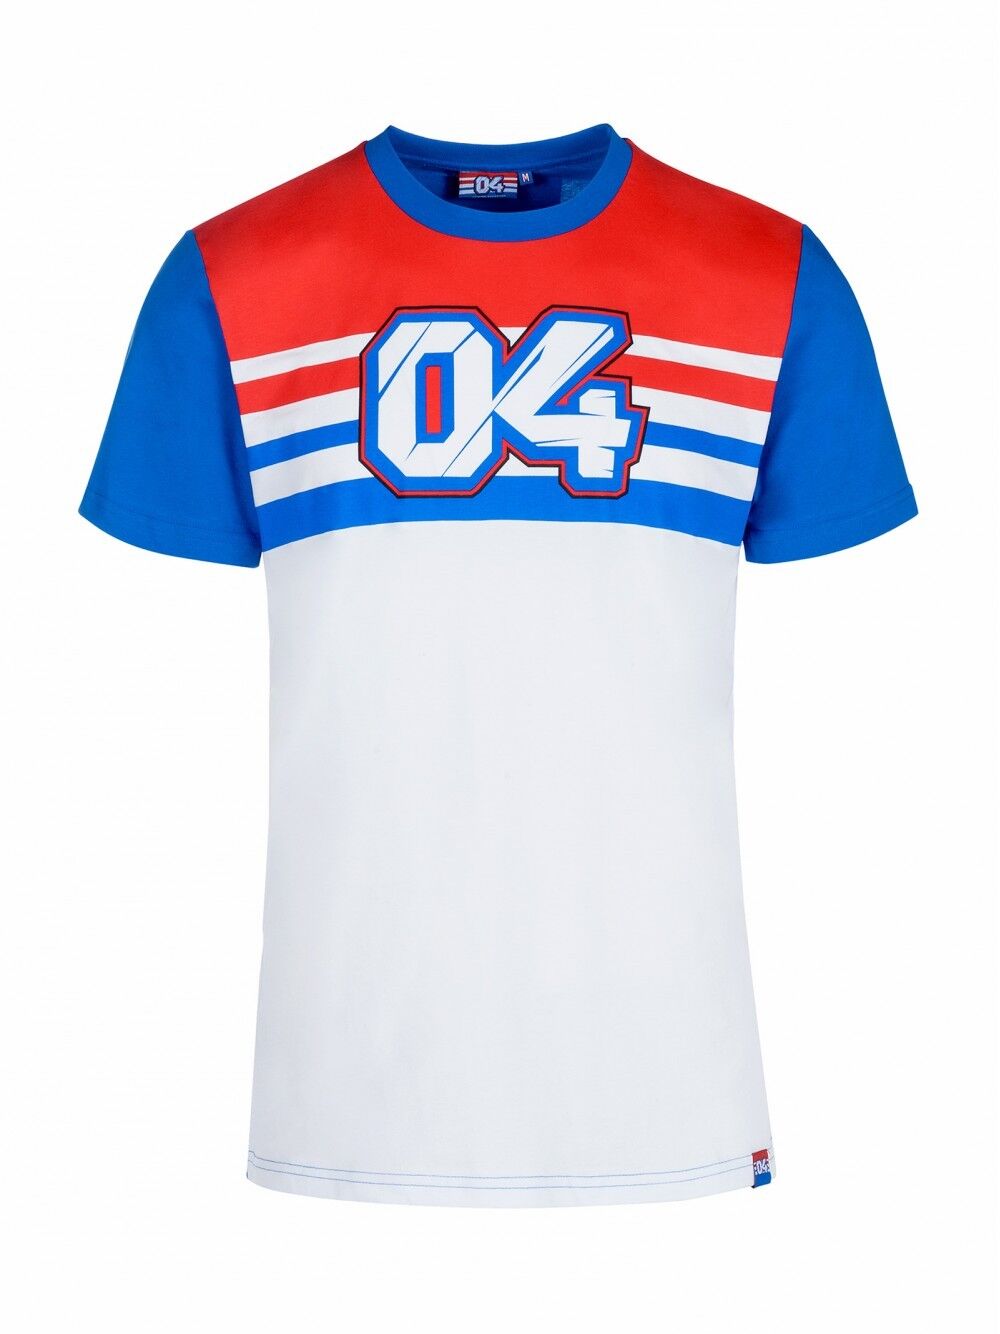 Andrea Dovizioso Official 04 Stripes T'shirt - 18 32201